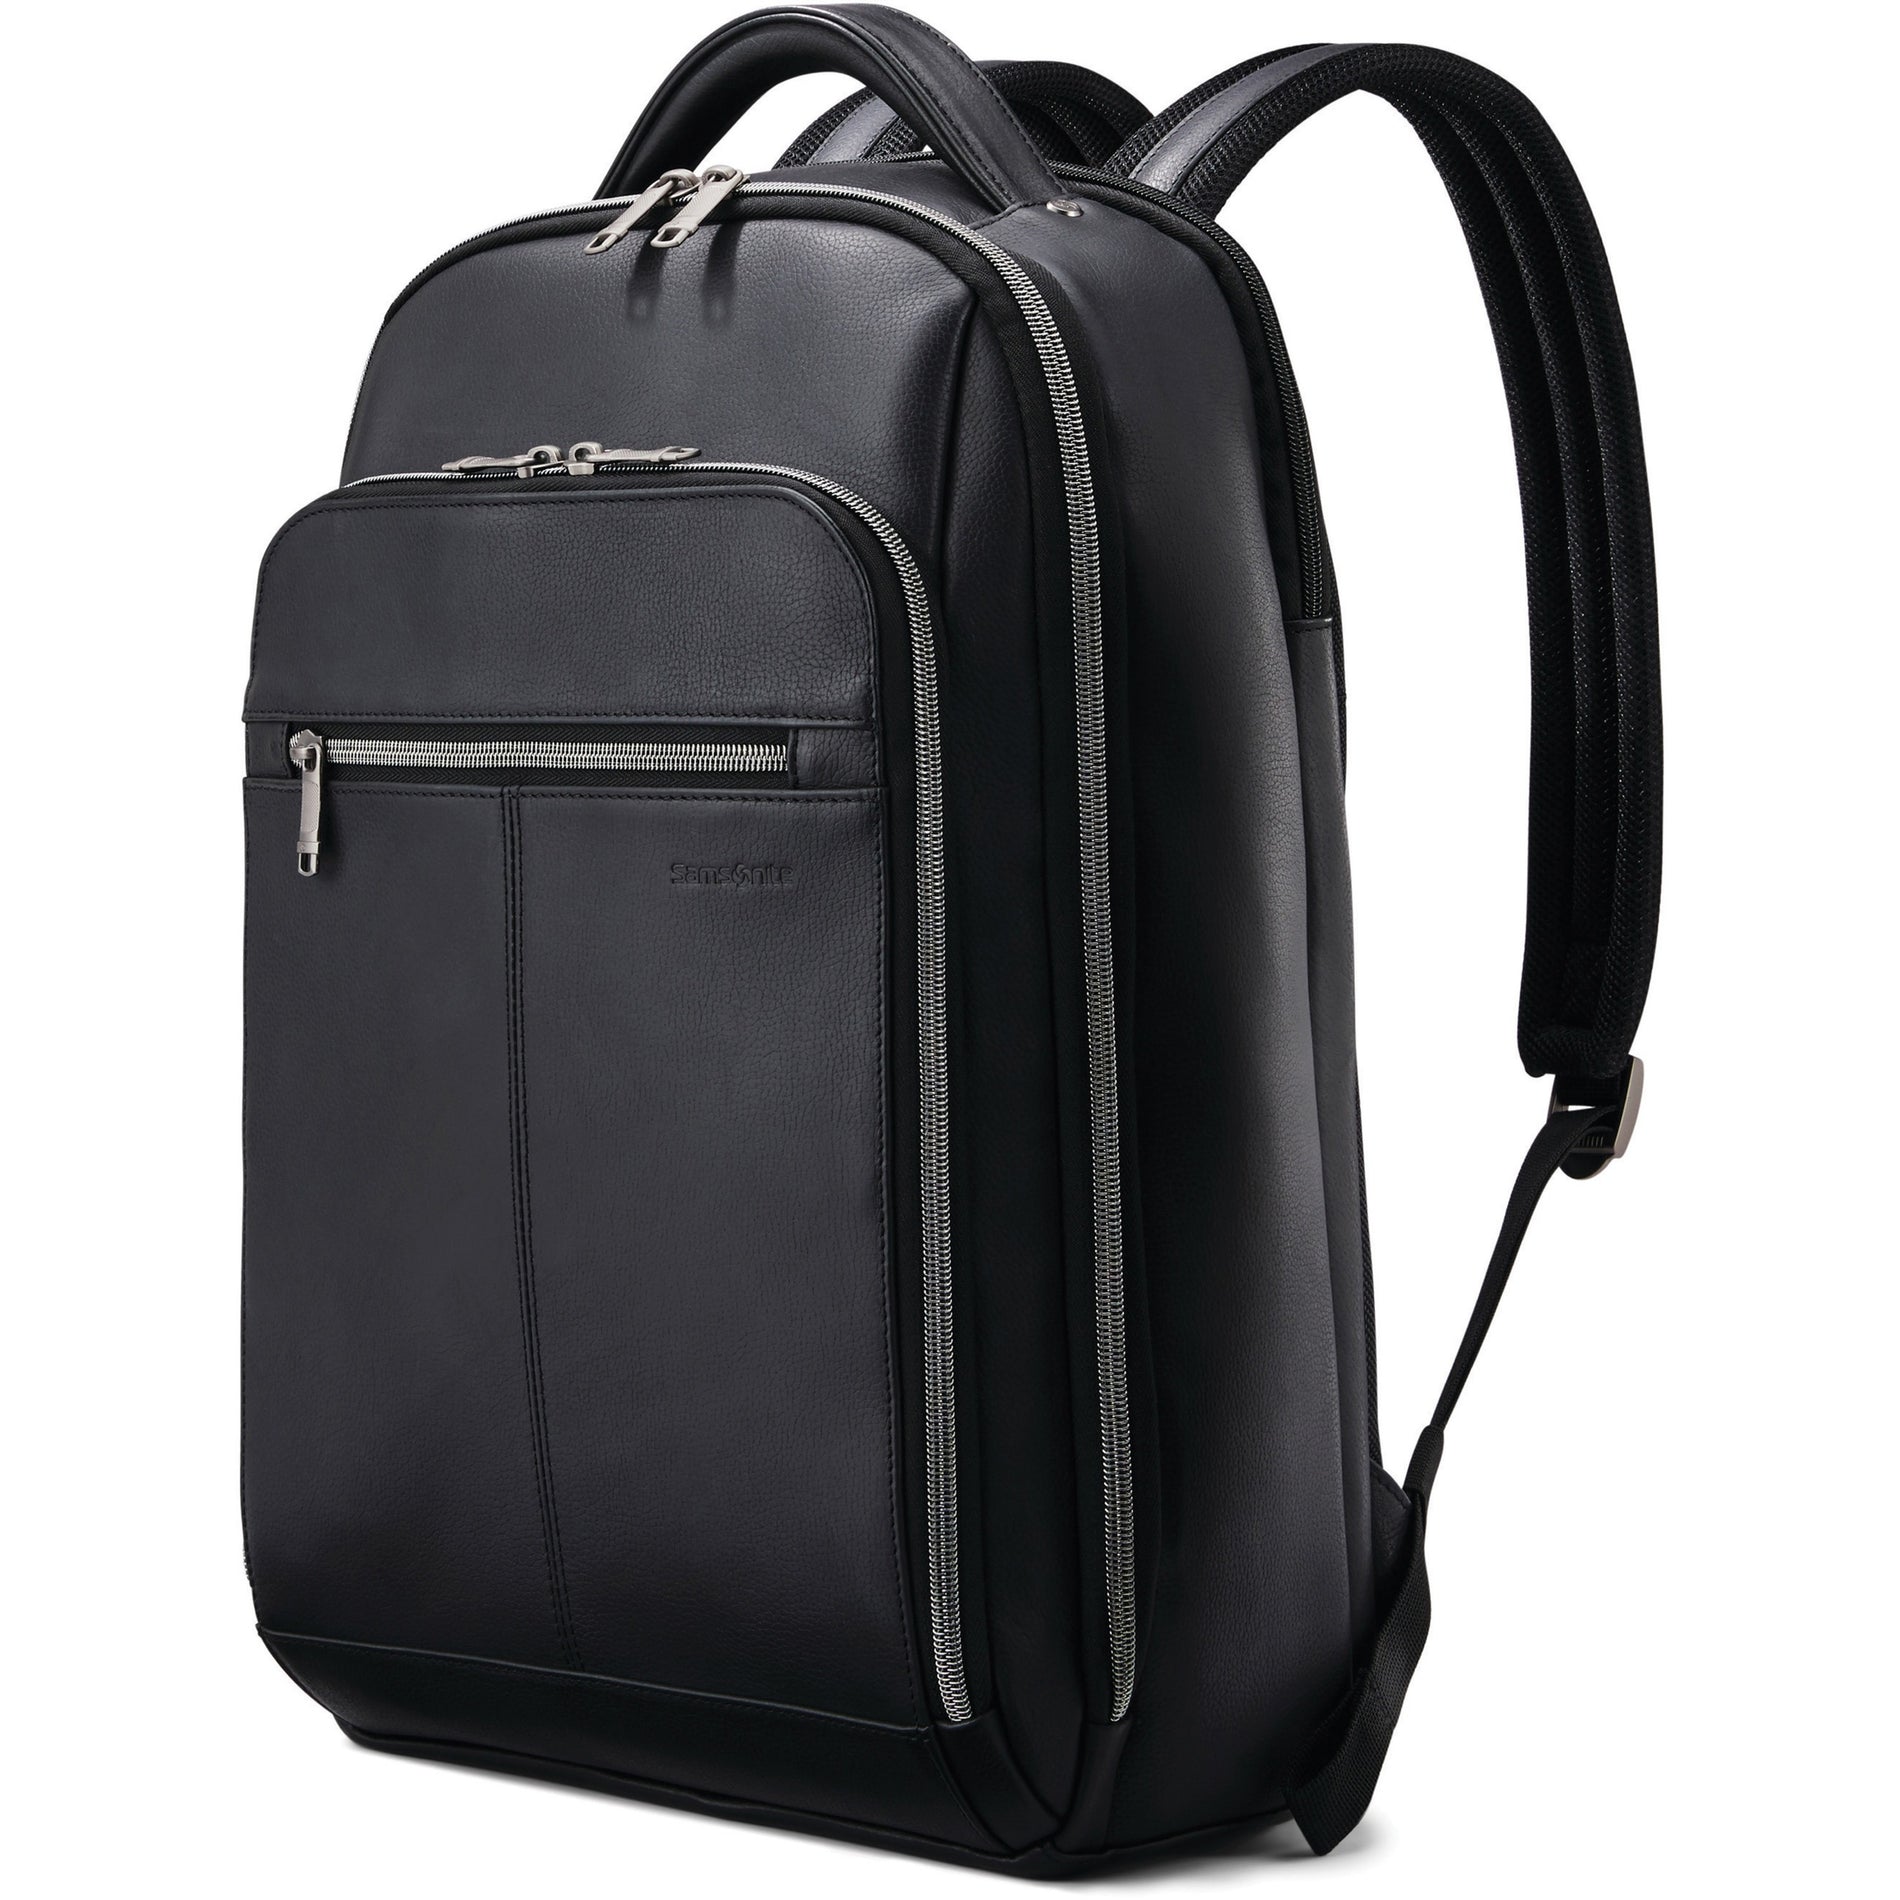 Samsonite 126037-1041 Leather Backpack, Fits 15.6" Notebook, Pen, Cell Phone, Tablet, Black